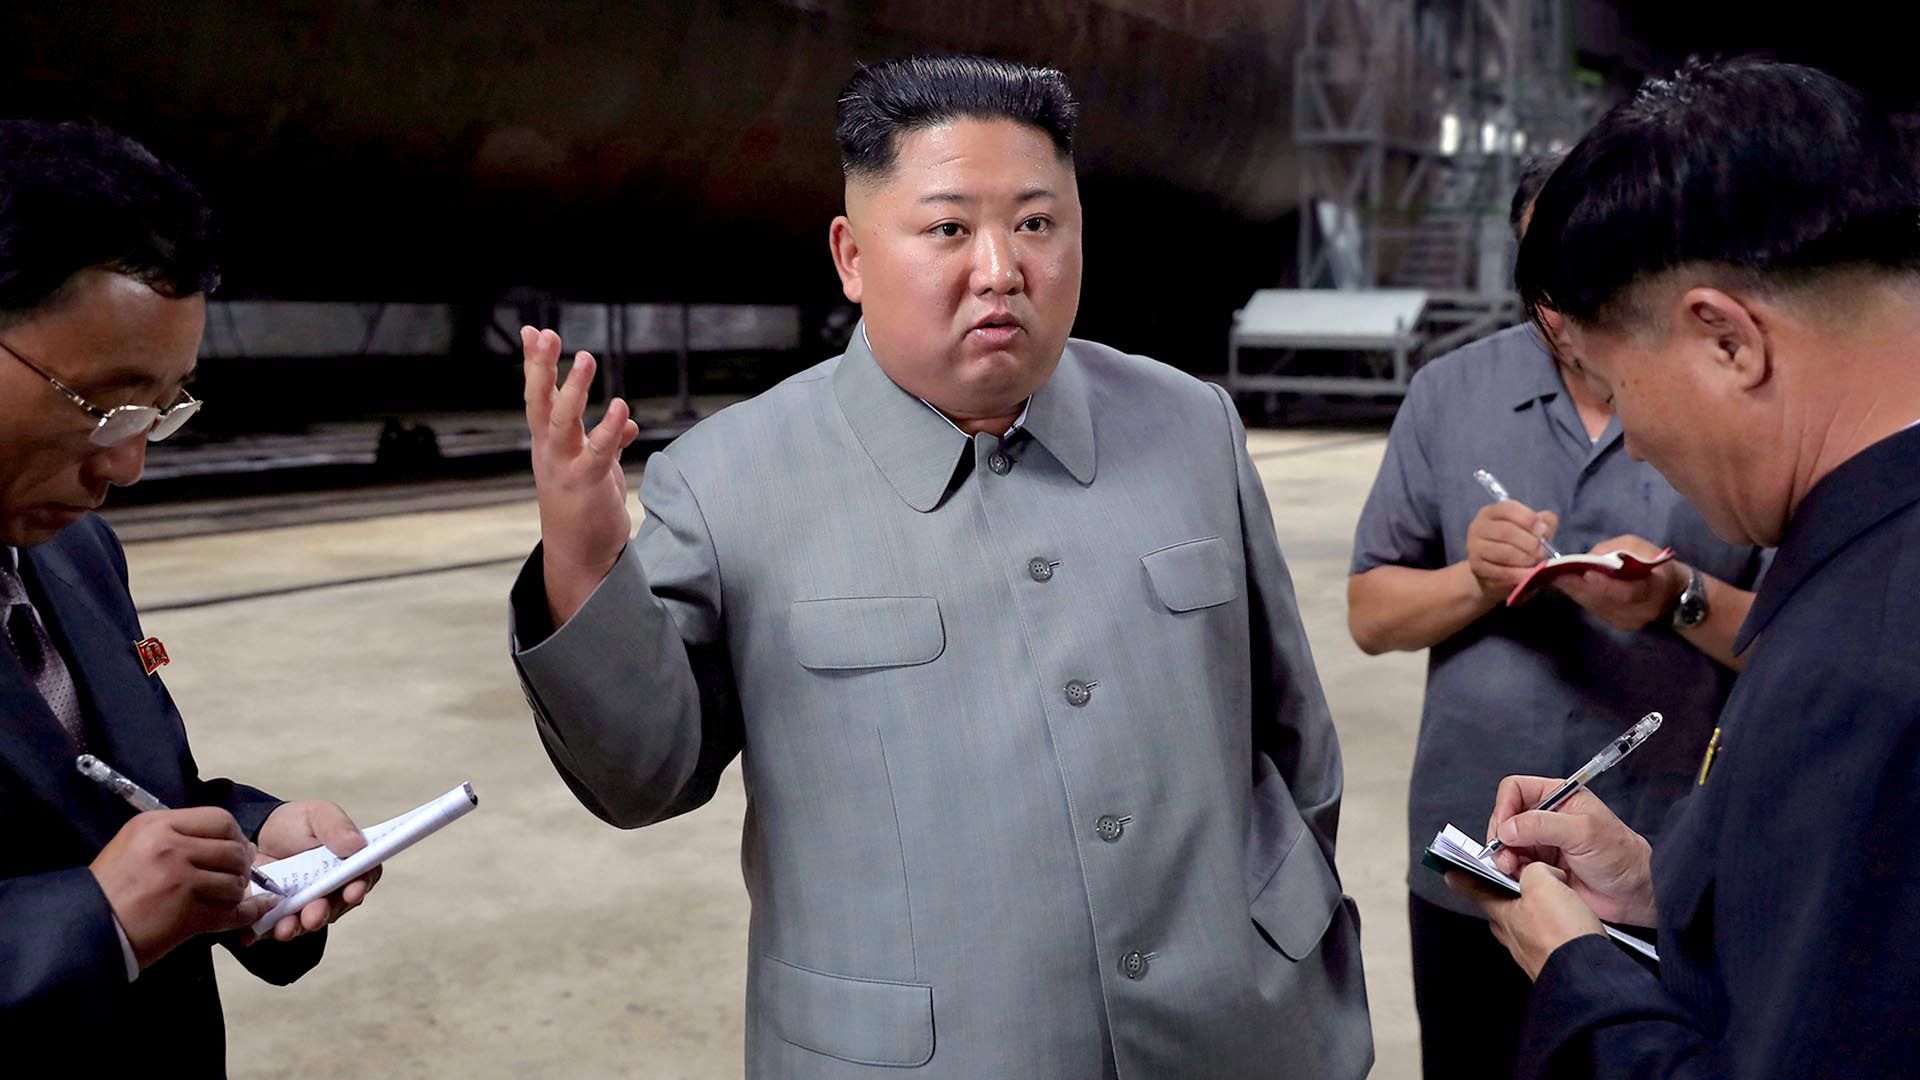 El dictador norcoreano Kim Jong-un (AFP)